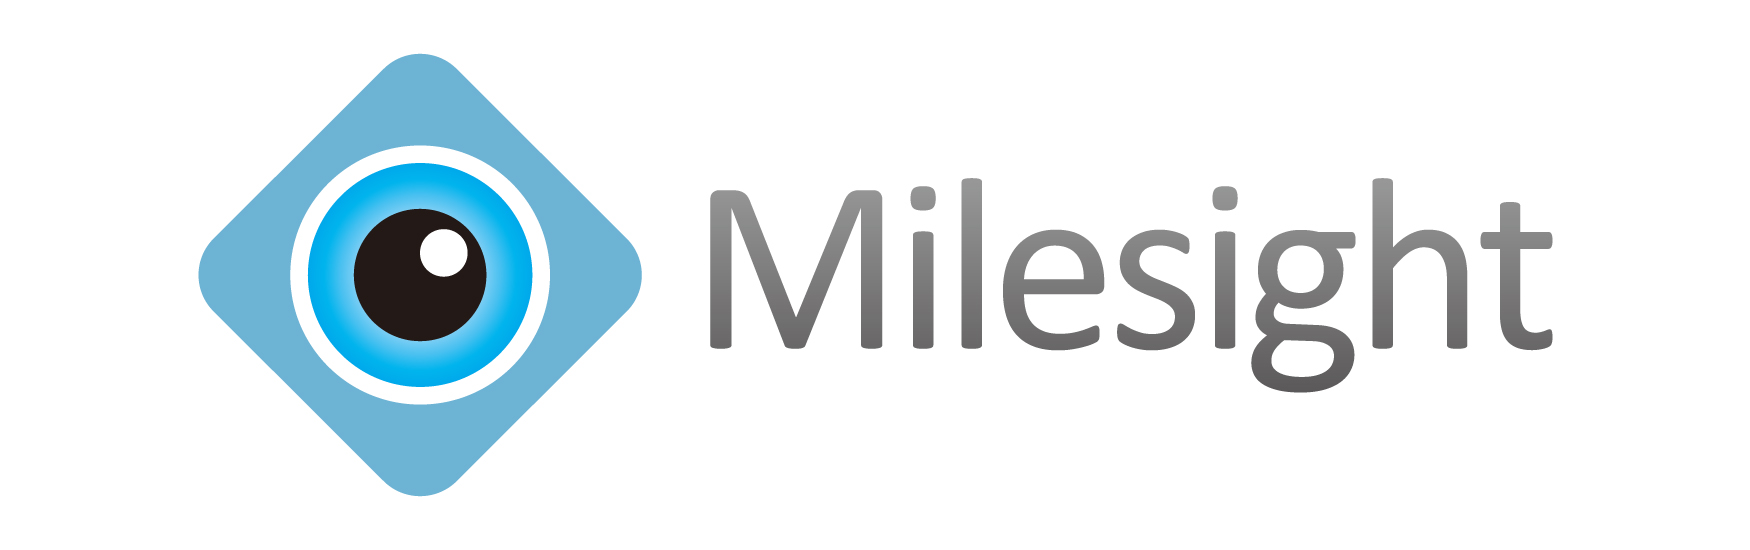 Milesight-logo.jpg